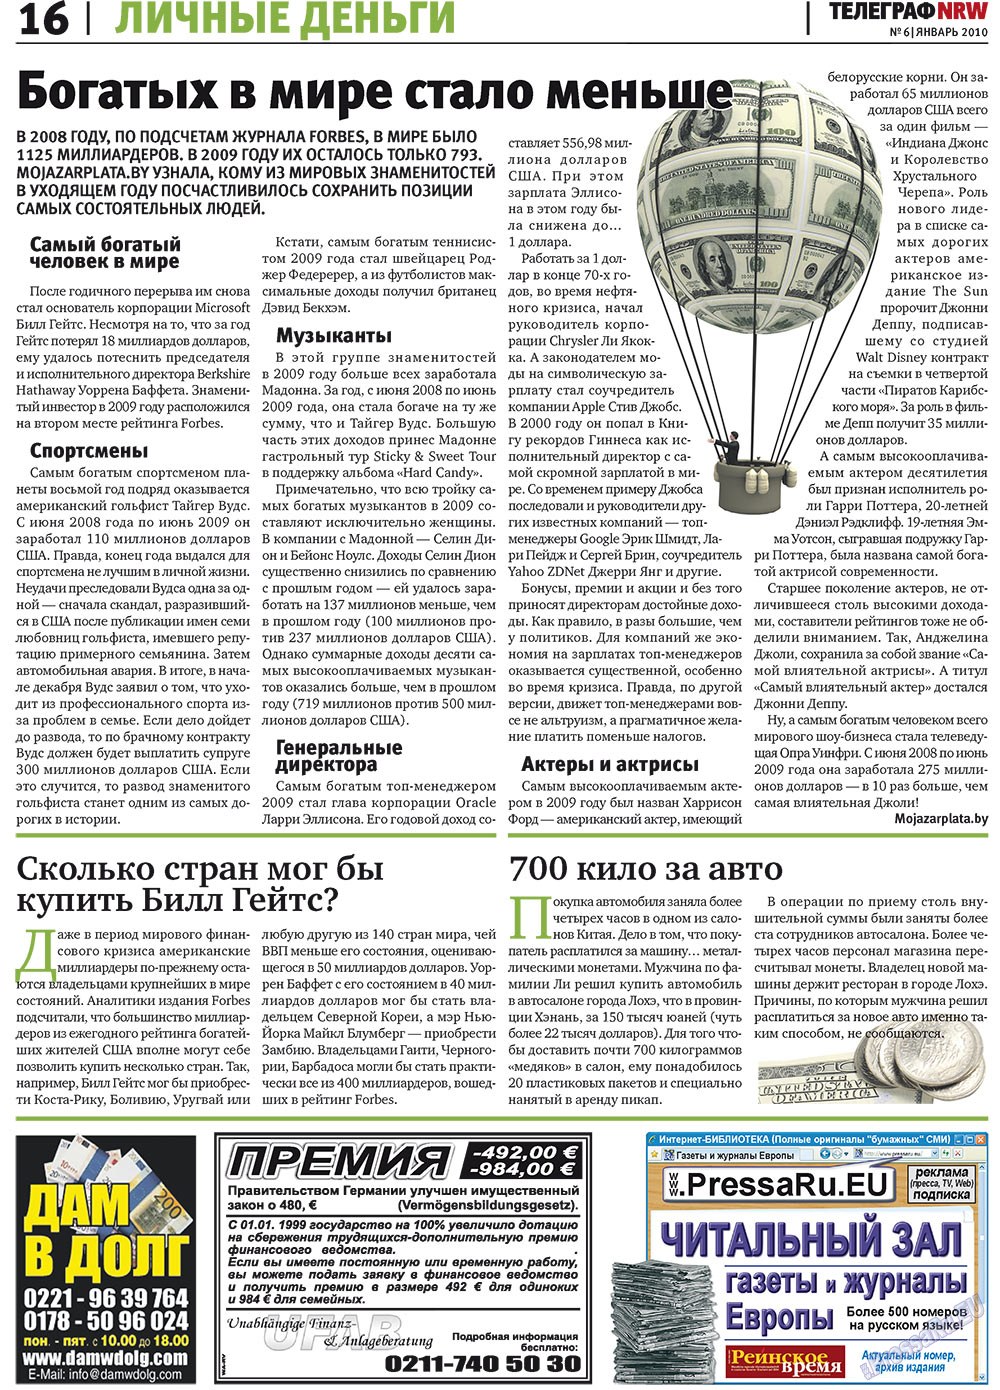 Телеграф NRW, газета. 2010 №1 стр.16